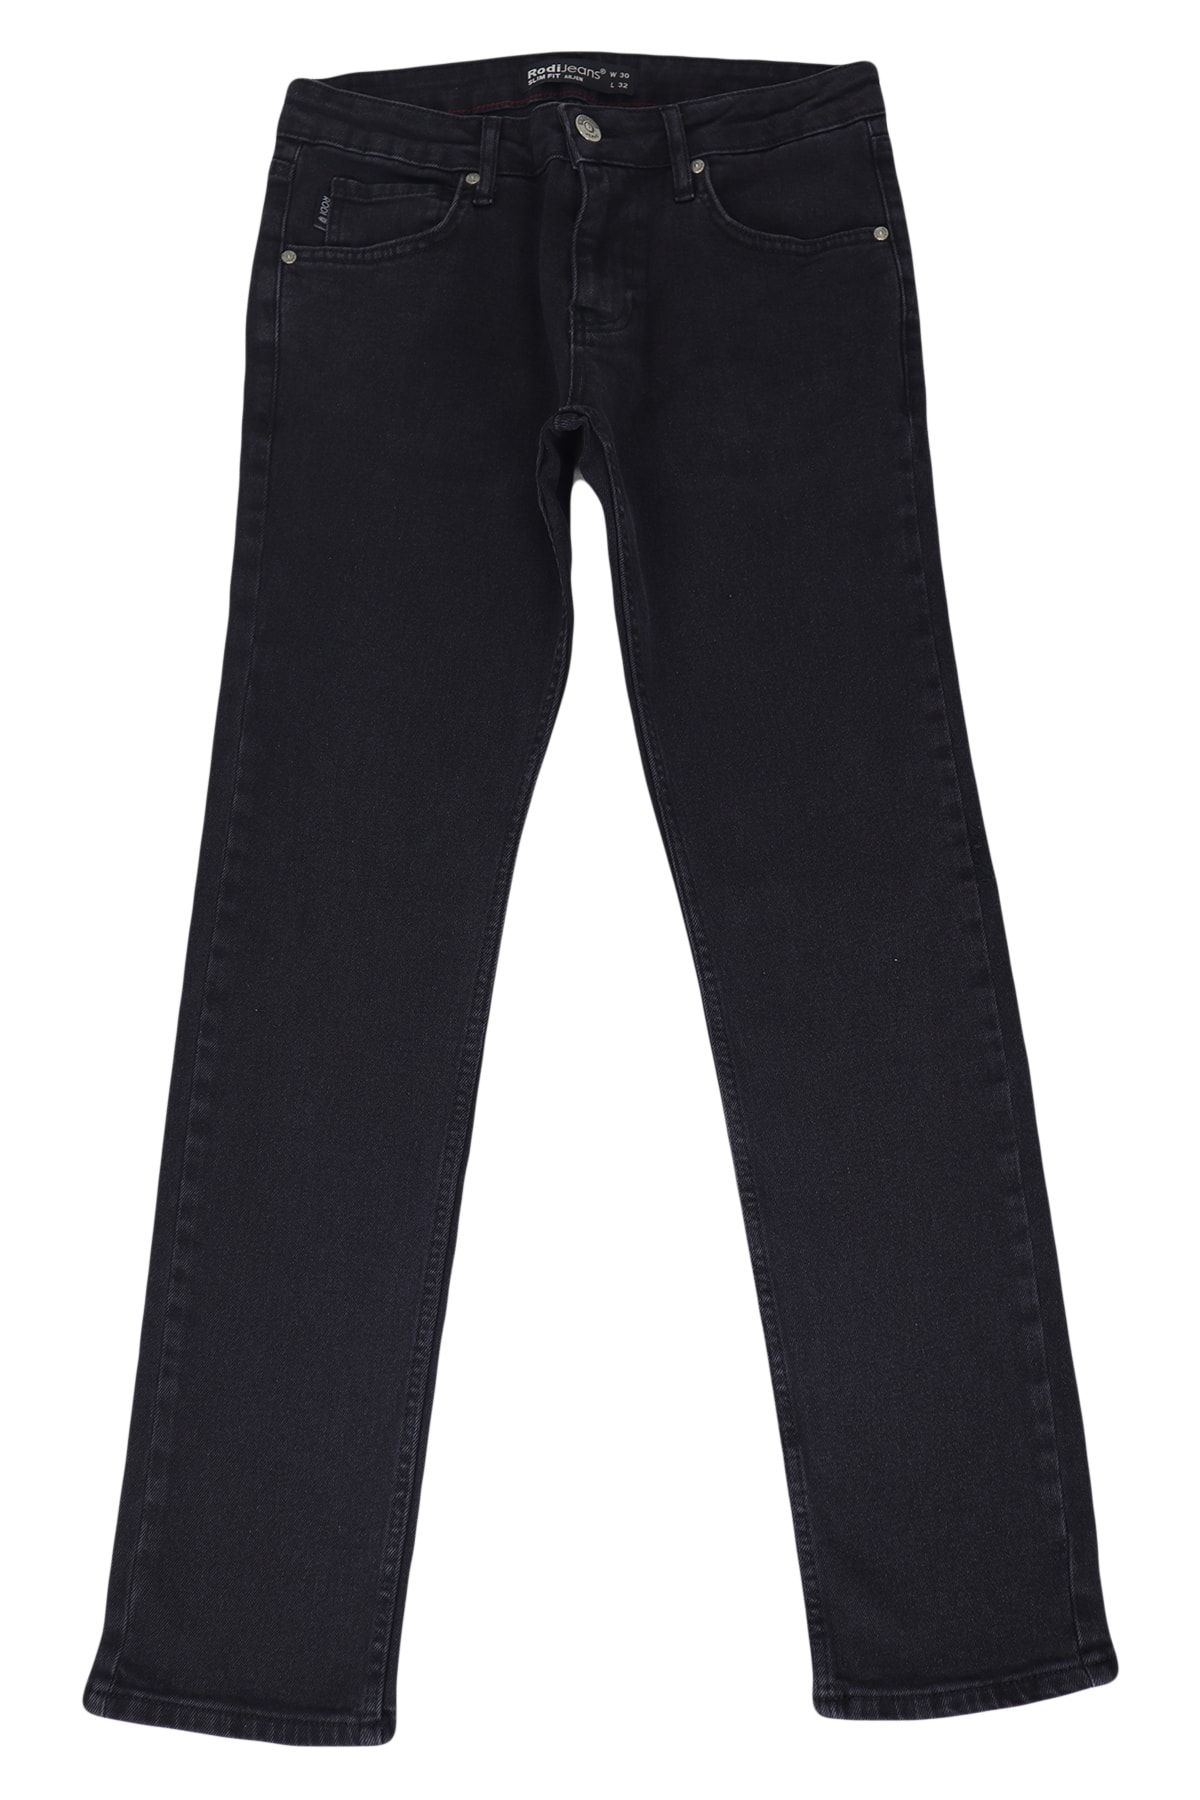 Rodi Jeans Fistan Store Erkek Füme Yüksek Bel Rahat Kesim Boru Paça Jean Pantolon